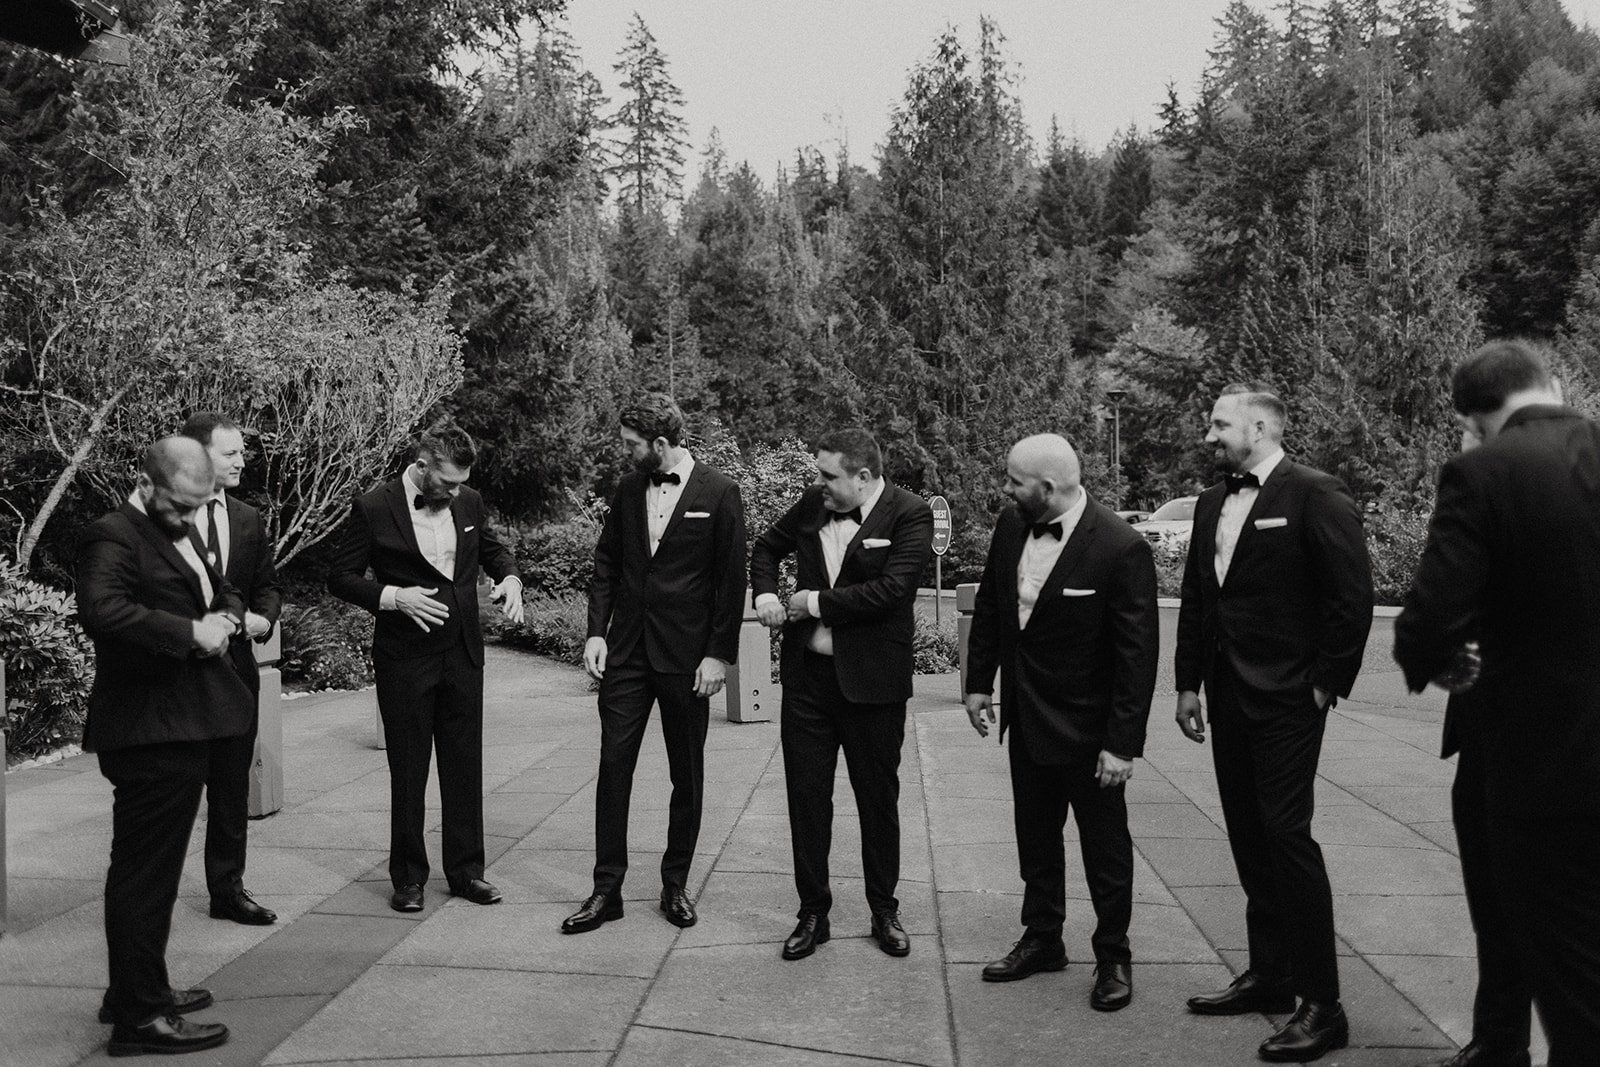 groom stands with groomsmen before wedding at alderbrook resort